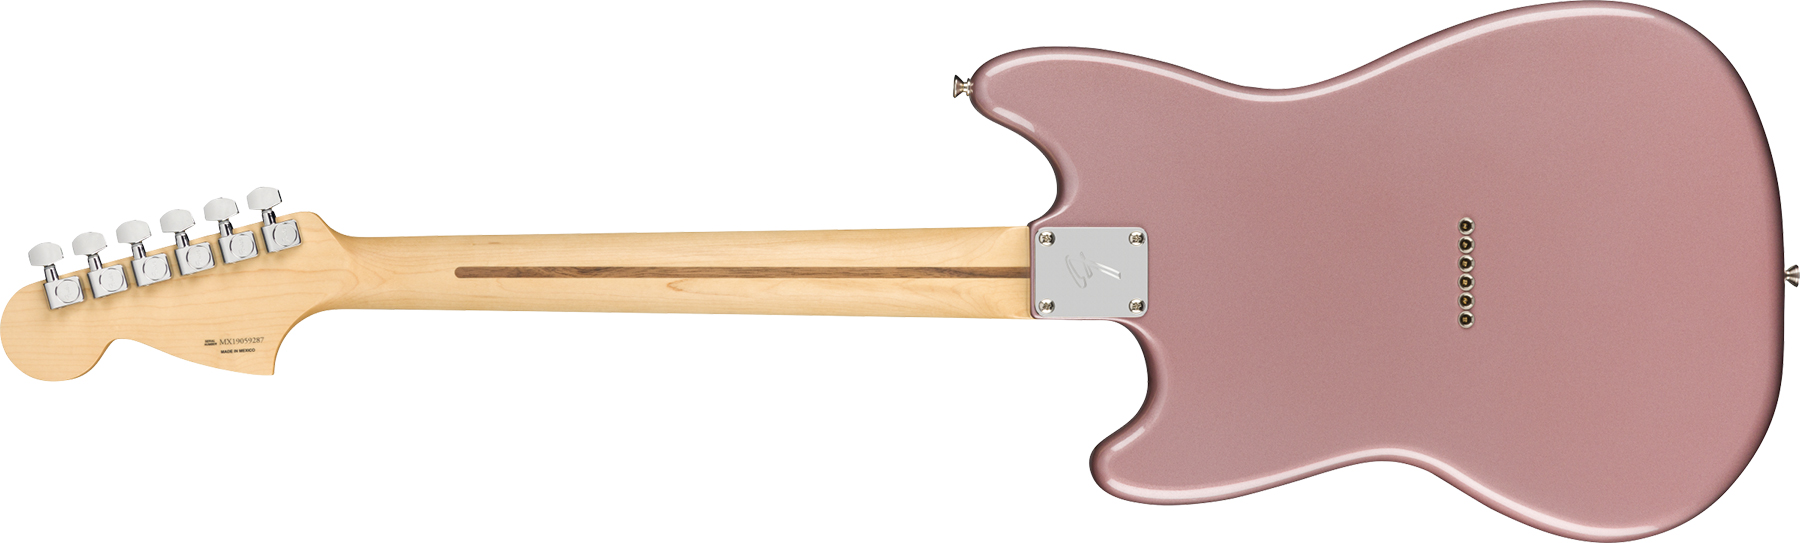 Fender Mustang Player 90 Mex Ht 2p90 Pf - Burgundy Mist Metallic - Guitarra electrica retro rock - Variation 1